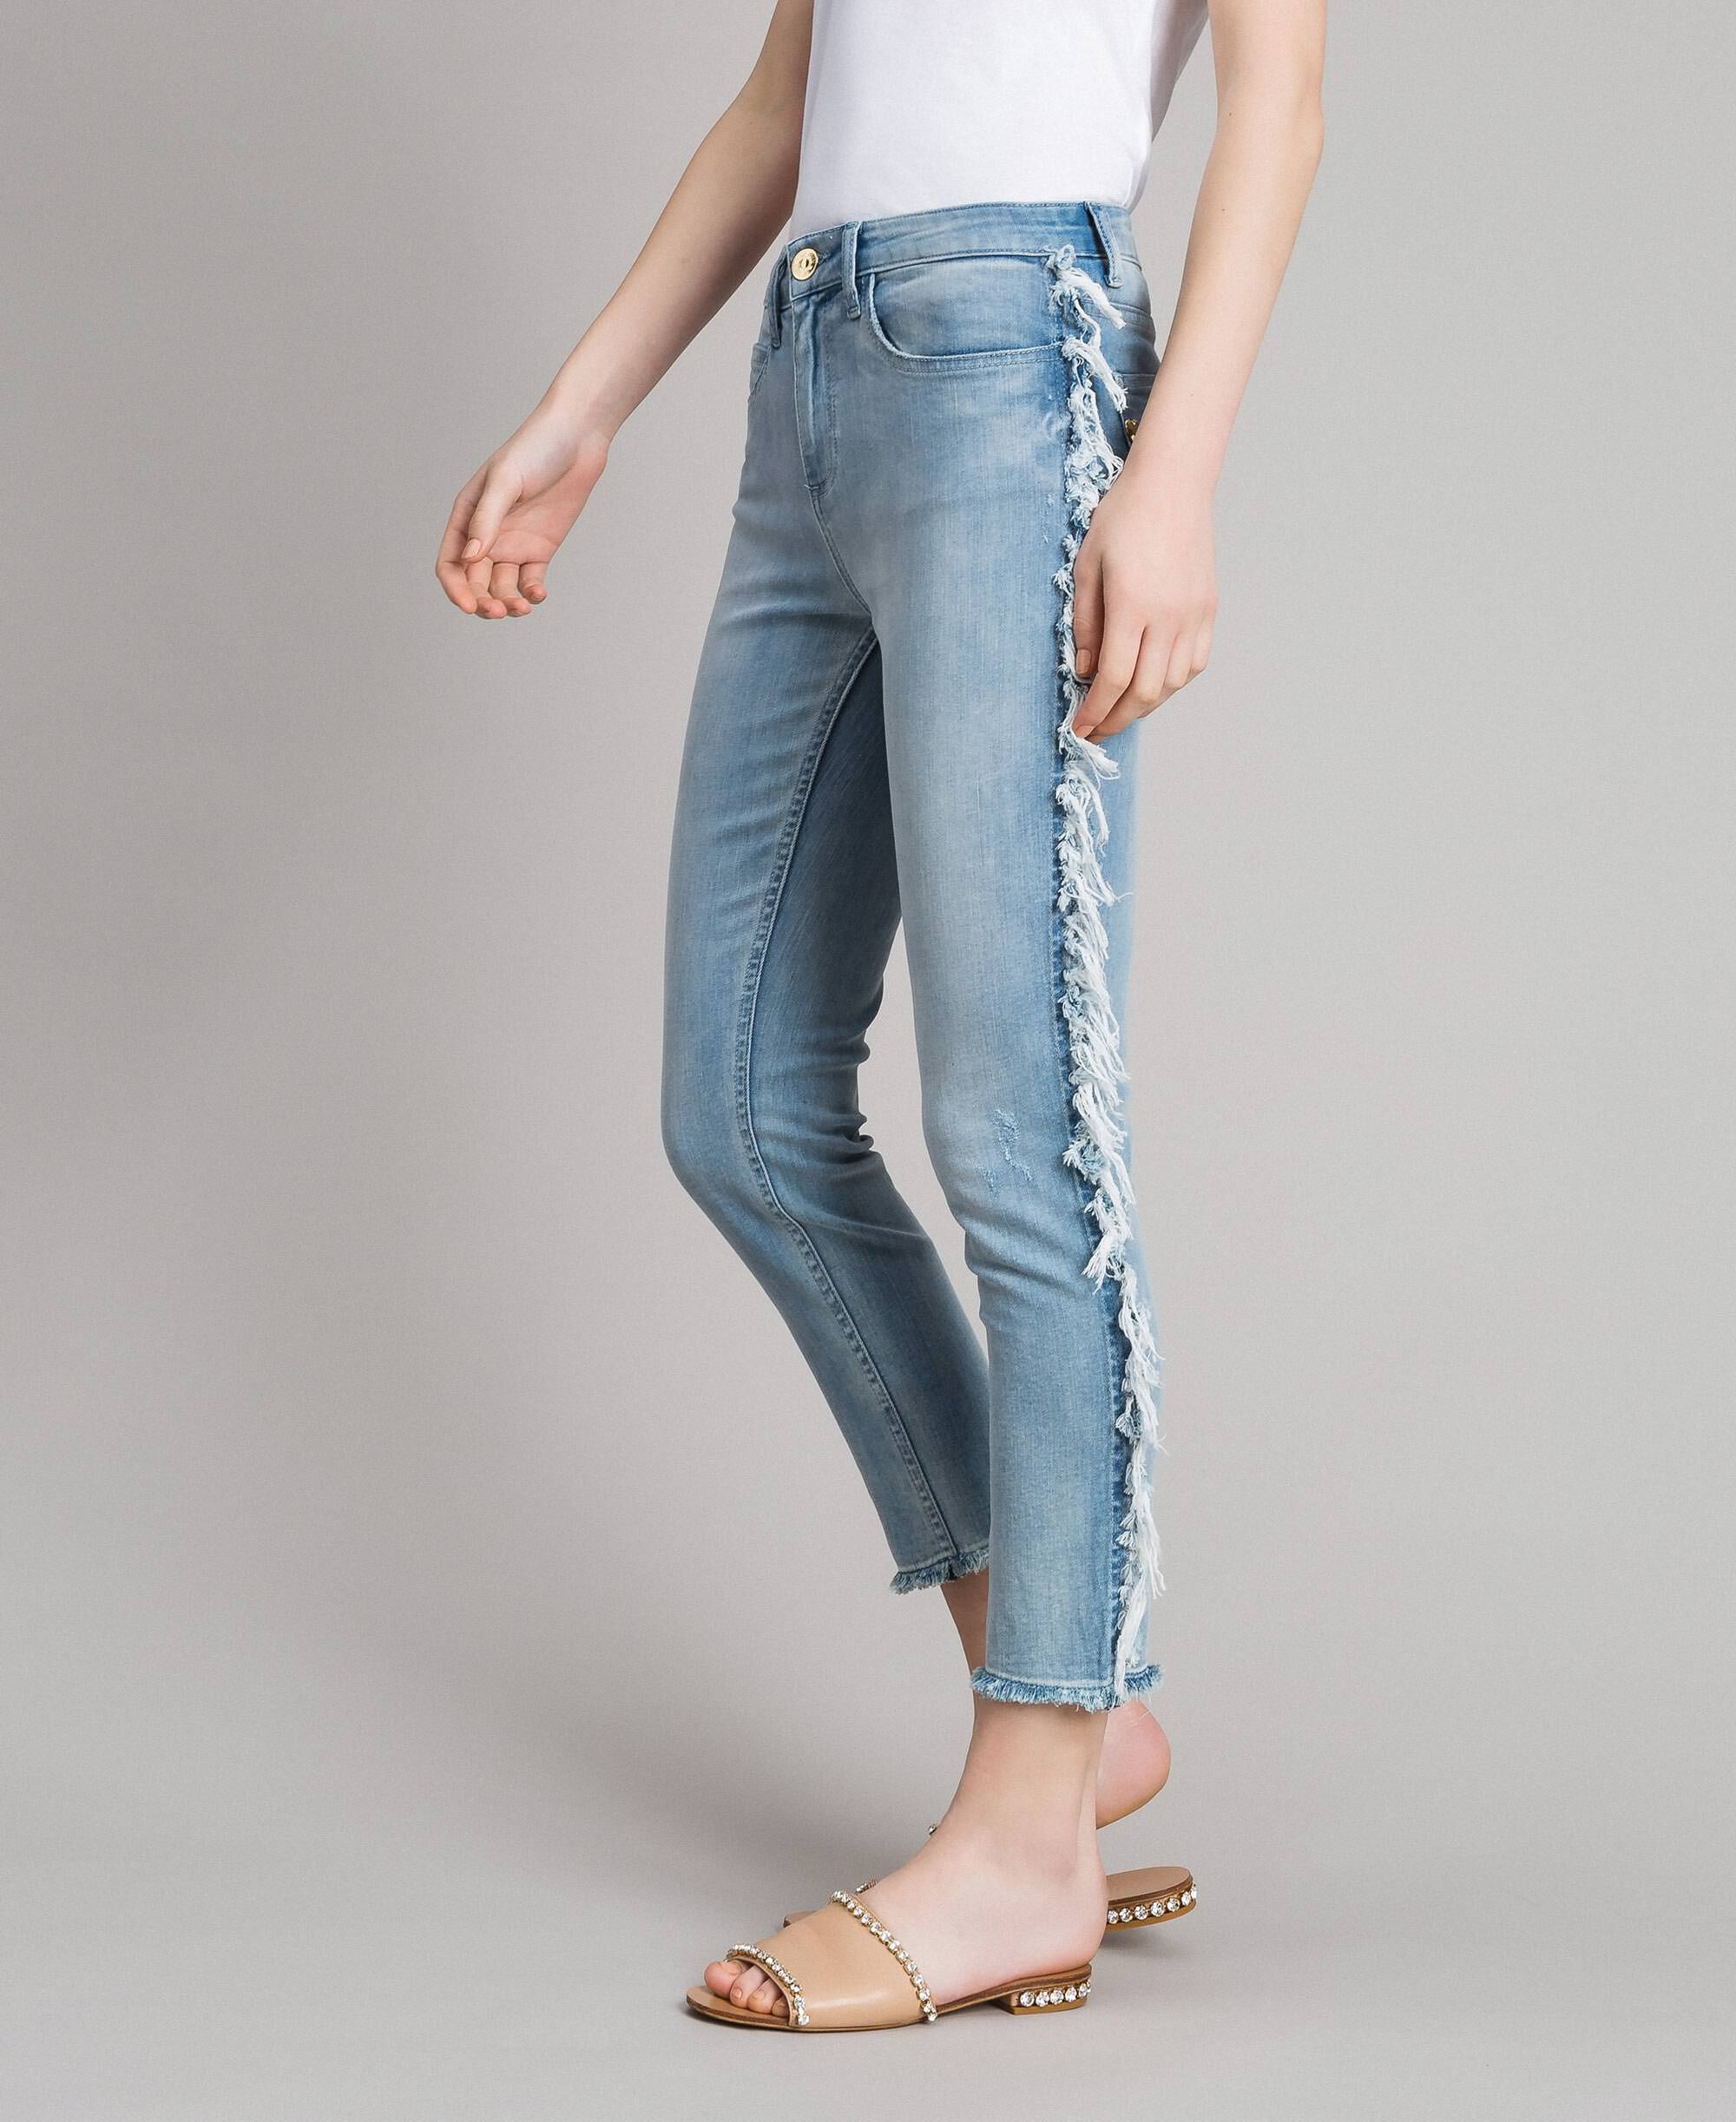 fringe skinny jeans